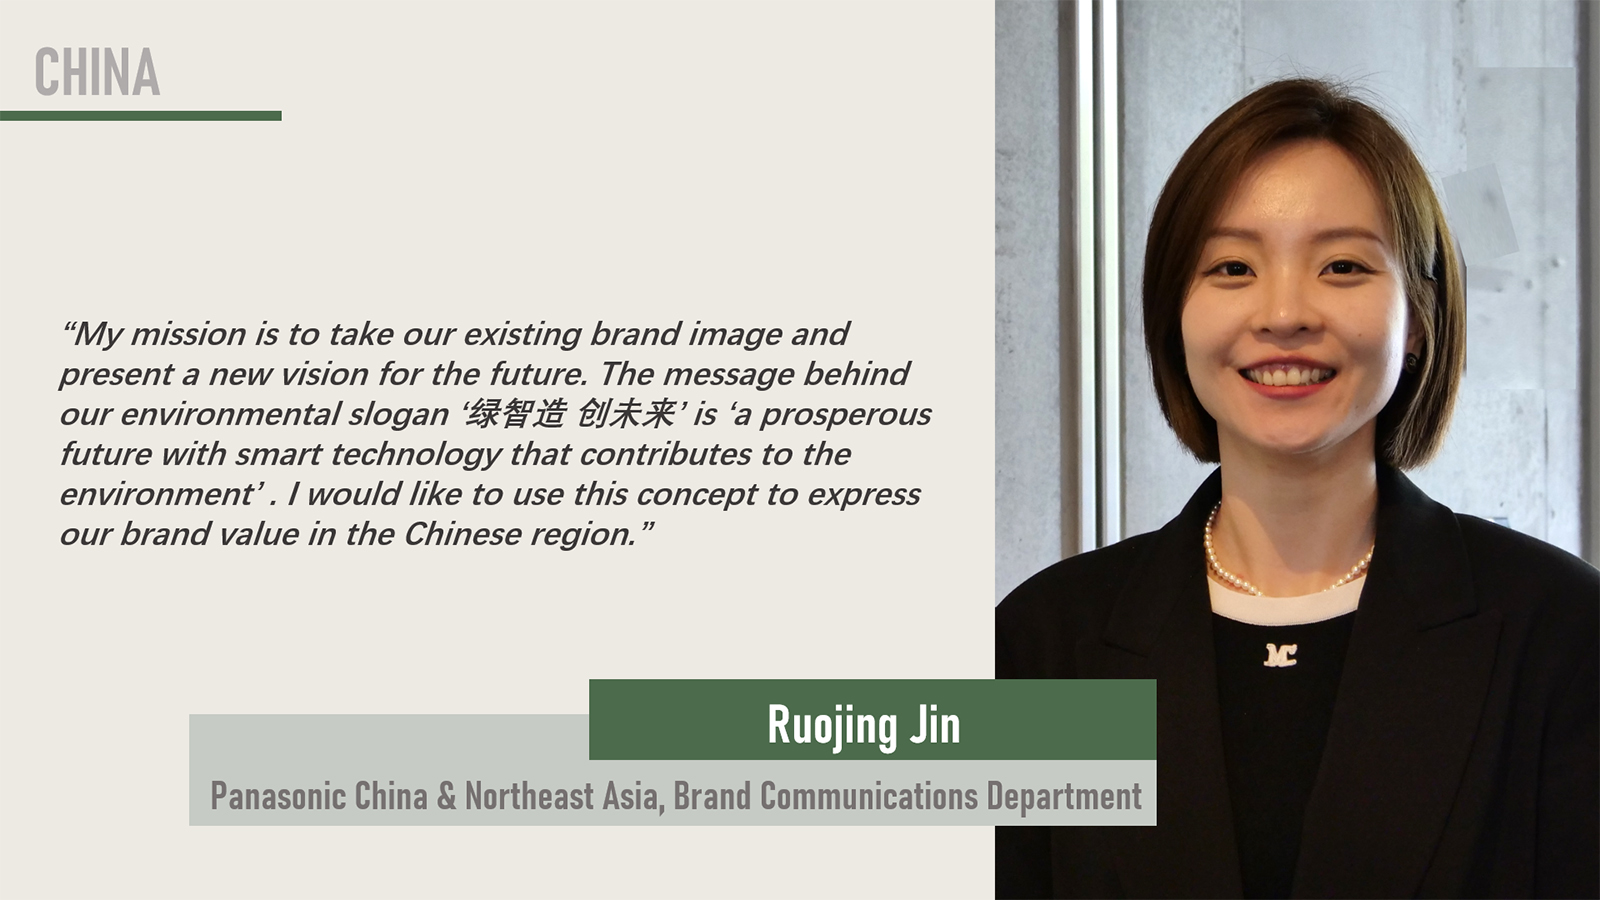 Photo: Ruojing Jin, Panasonic China & Northeast Asia, Brand Communications Department